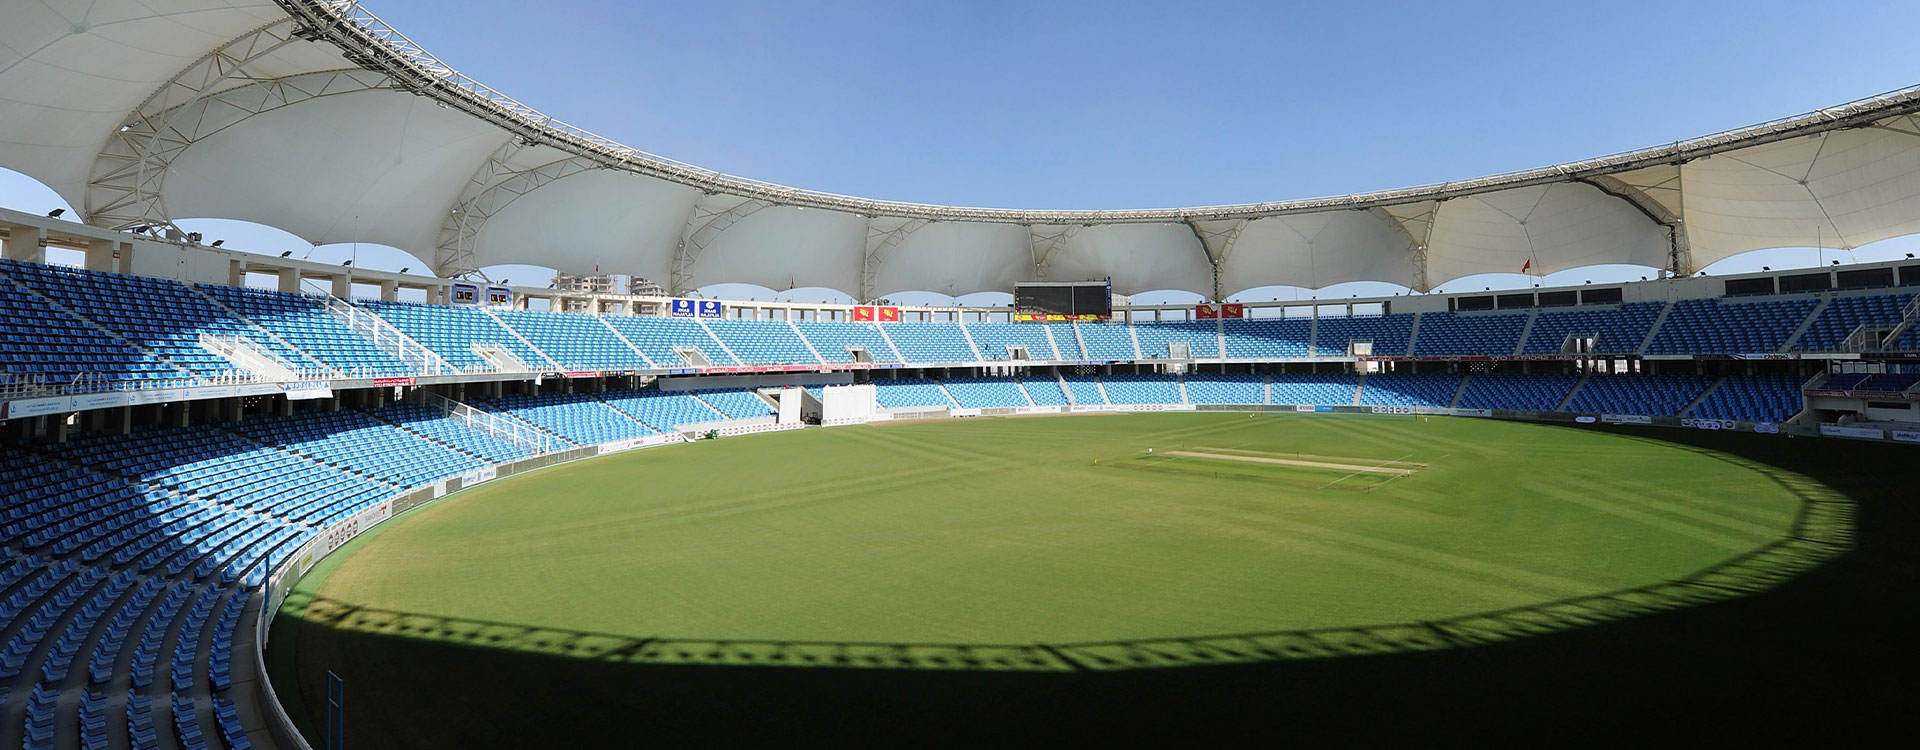 Dubai Sports City Cricket Stadium